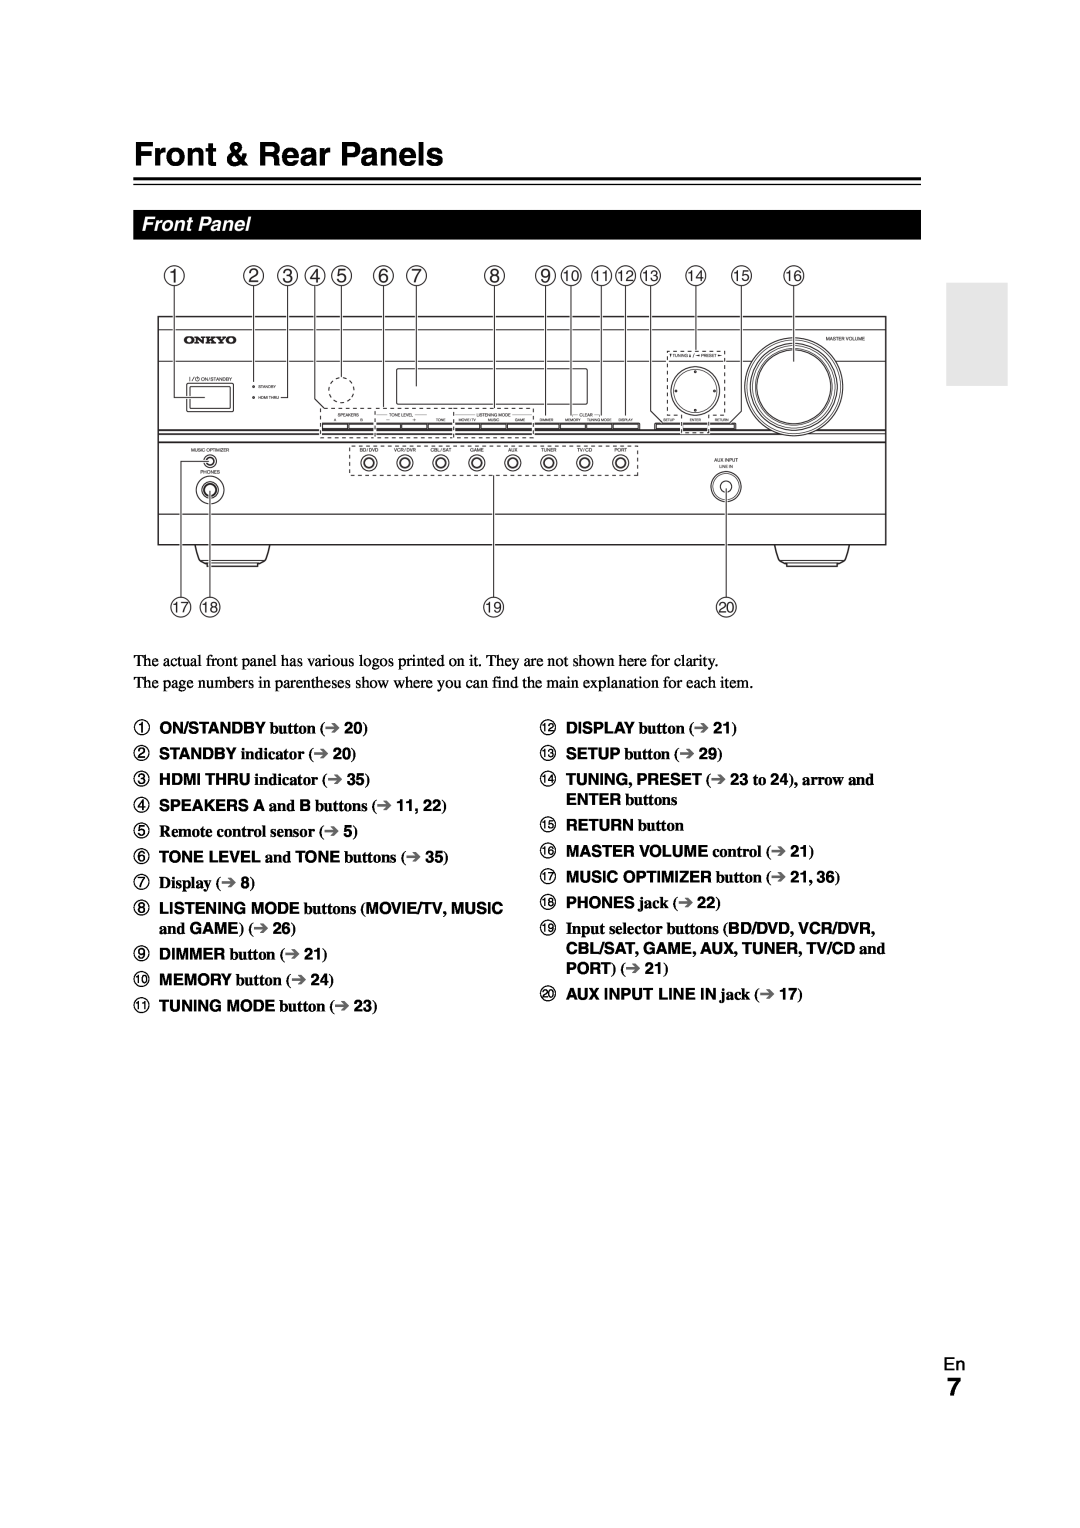 Onkyo AVX-280 instruction manual Front & Rear Panels, Front Panel, b c d e f g, ij klm n o 